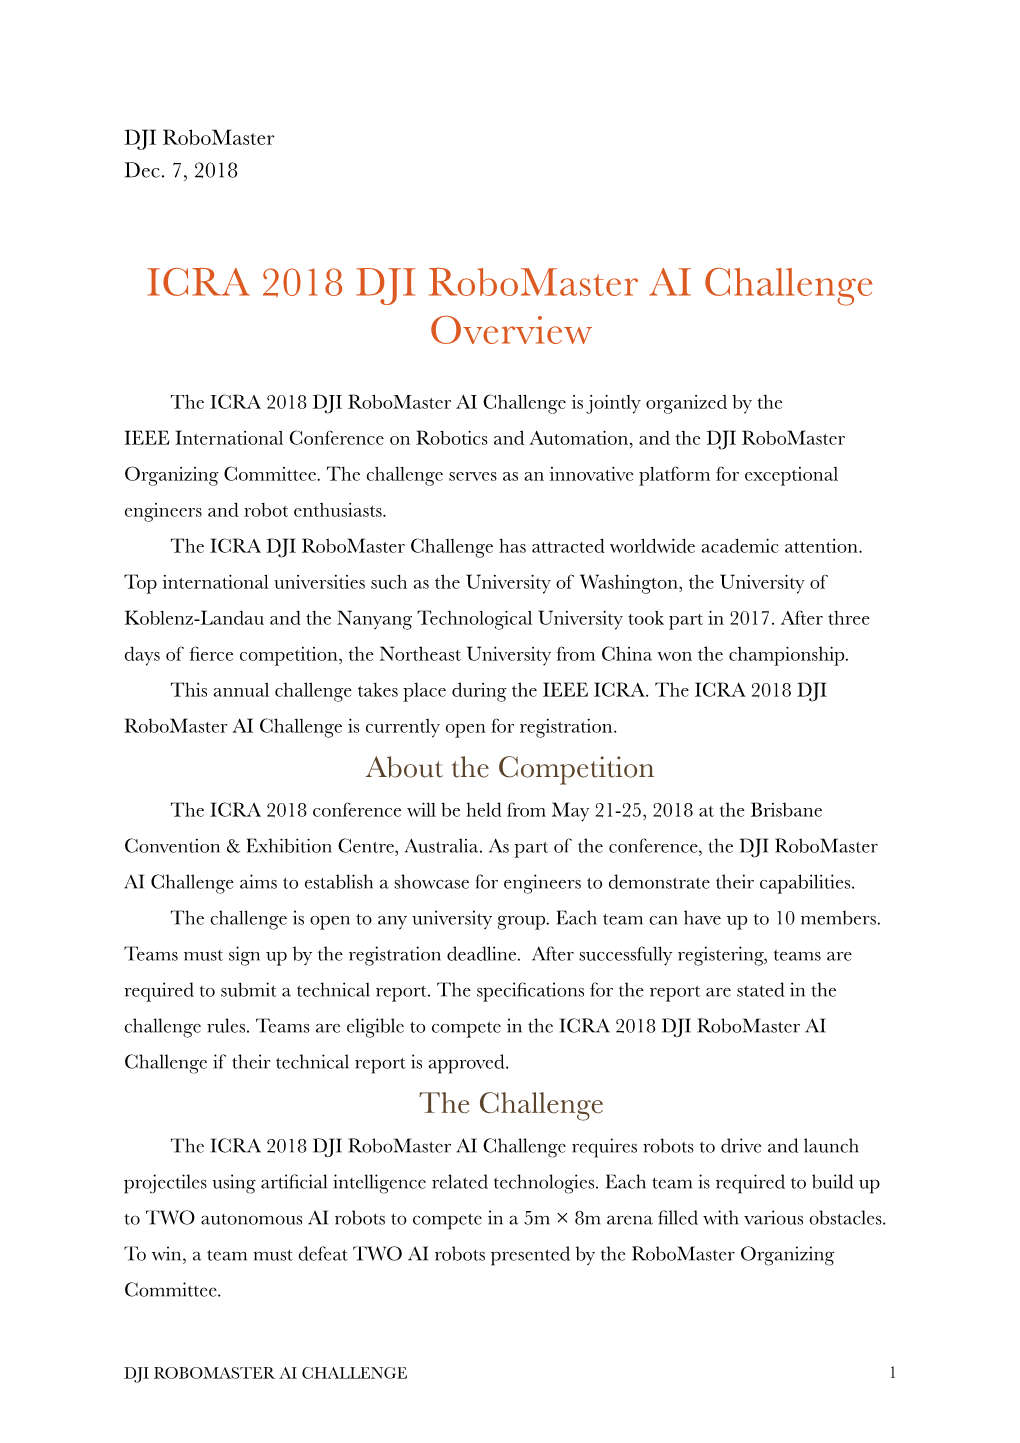 ICRA 2018 DJI Robomaster AI Challenge Overview